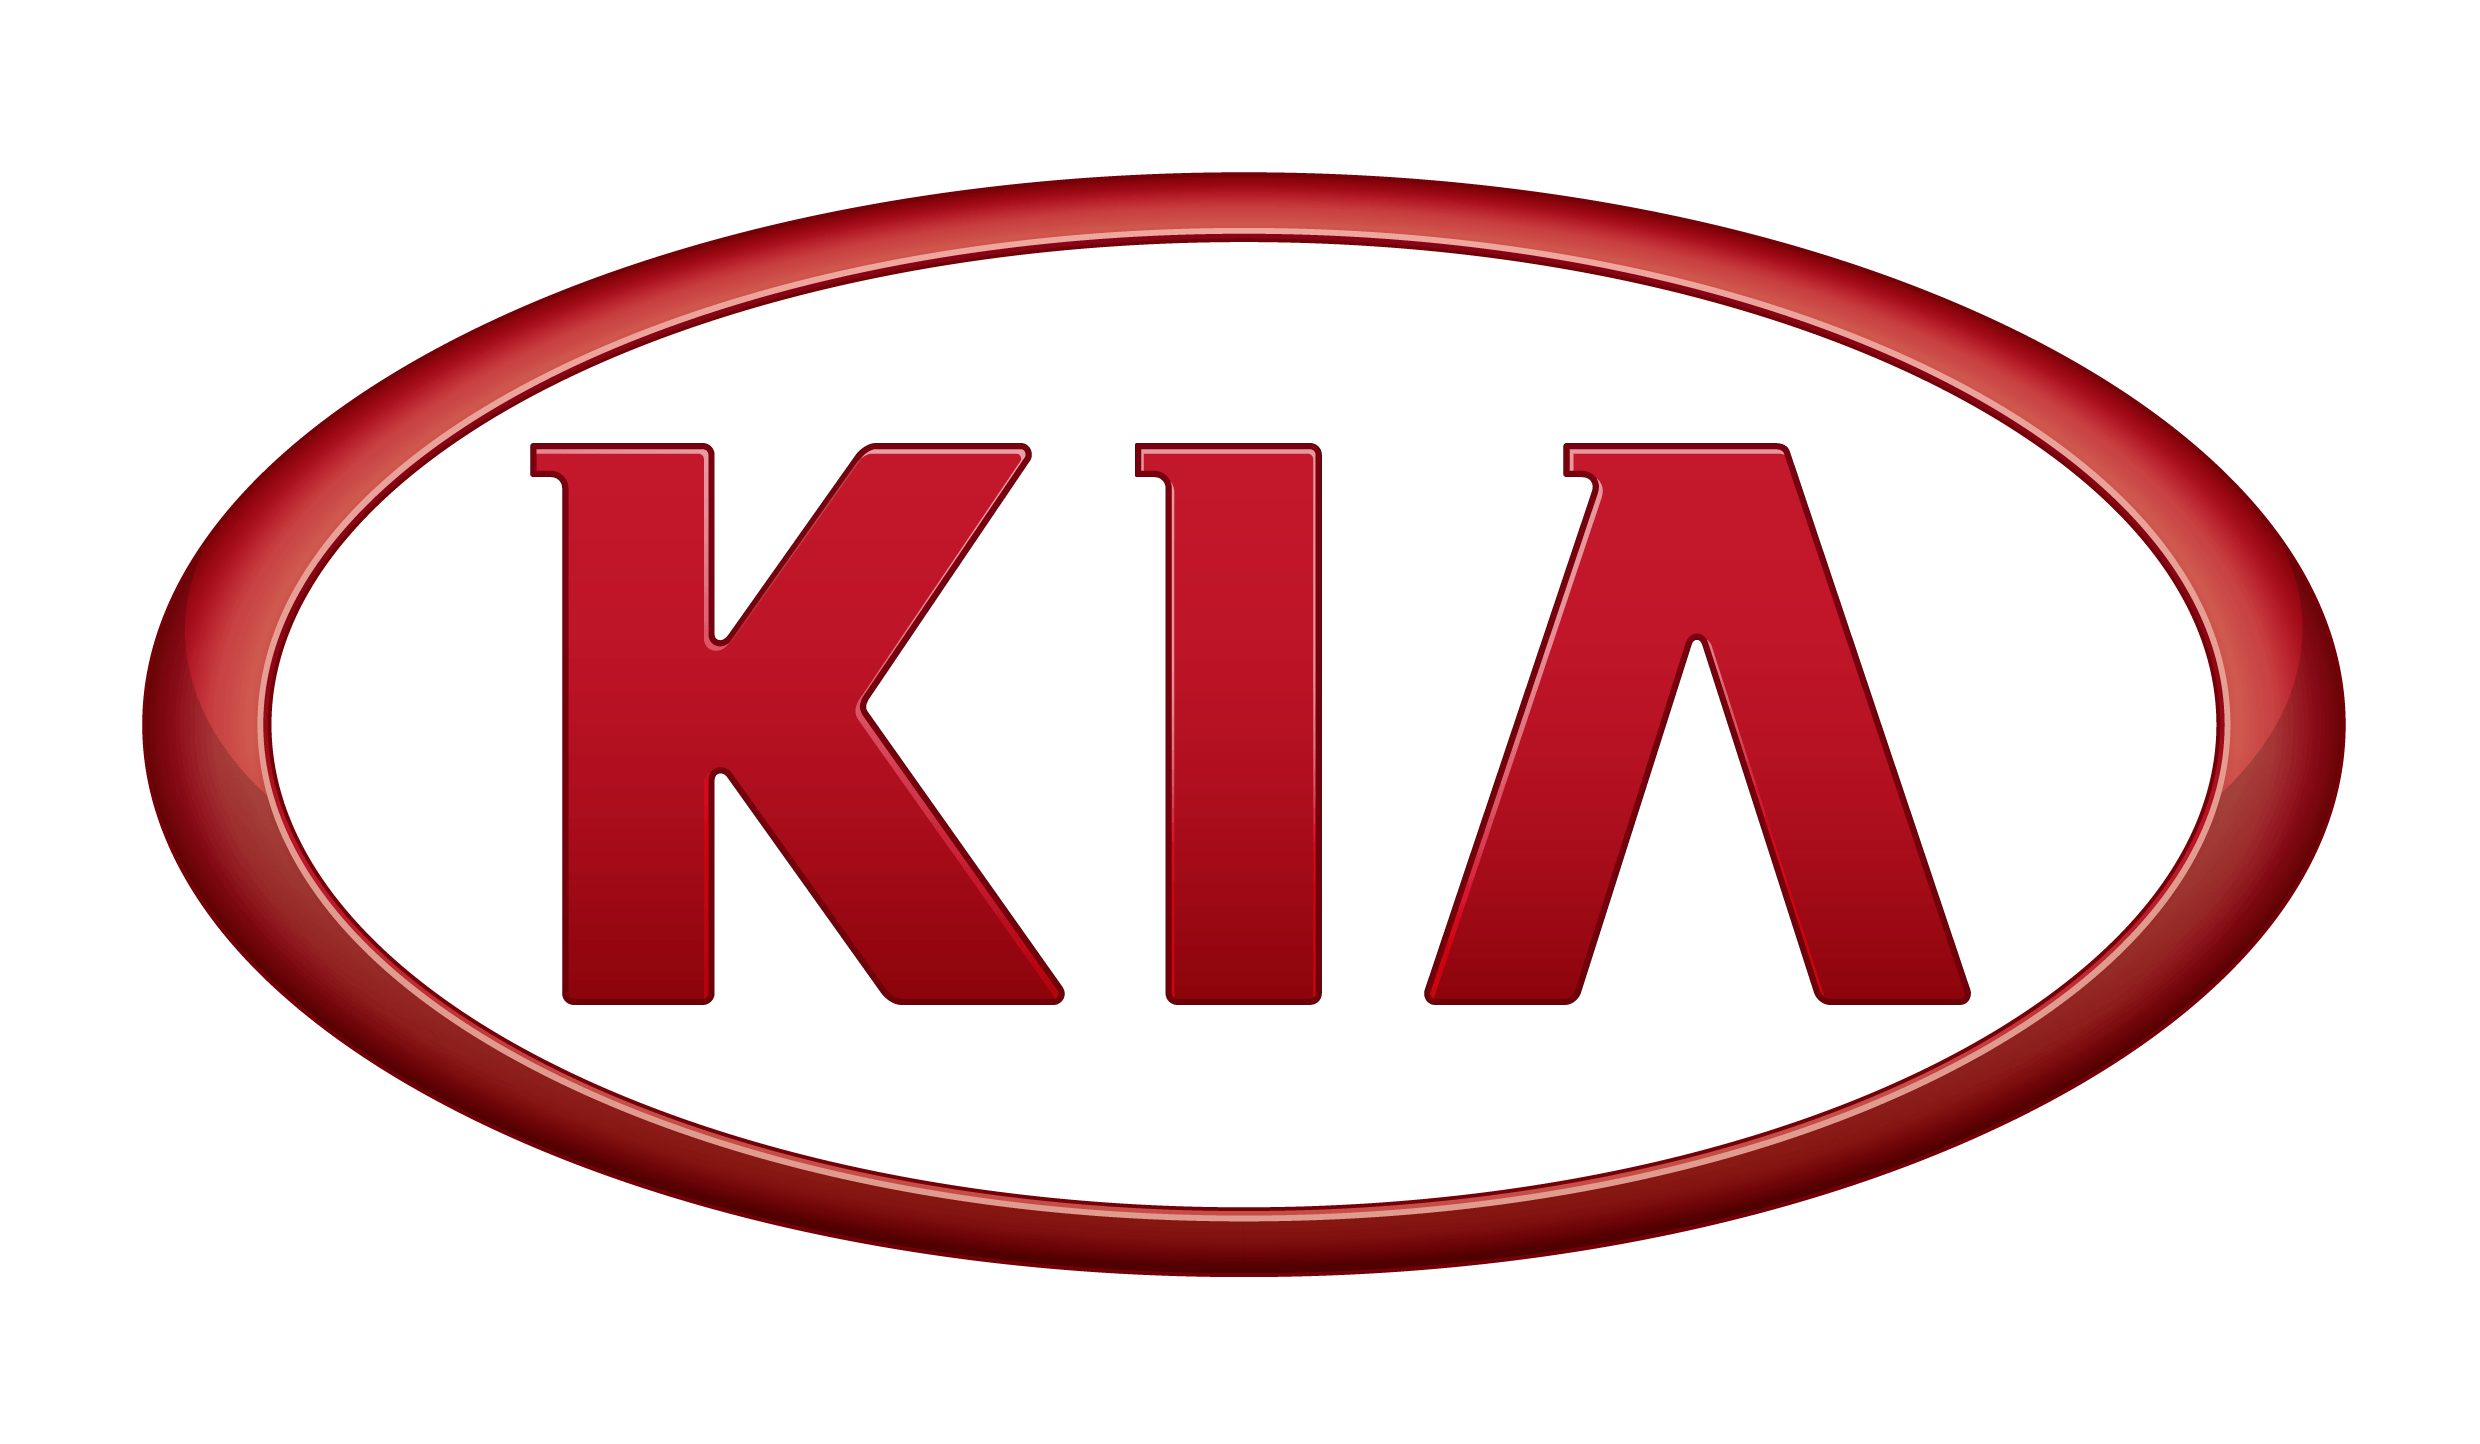 Car with Red Oval Logo - Kia Logo, Kia Car Symbol Meaning and History | Car Brand Names.com